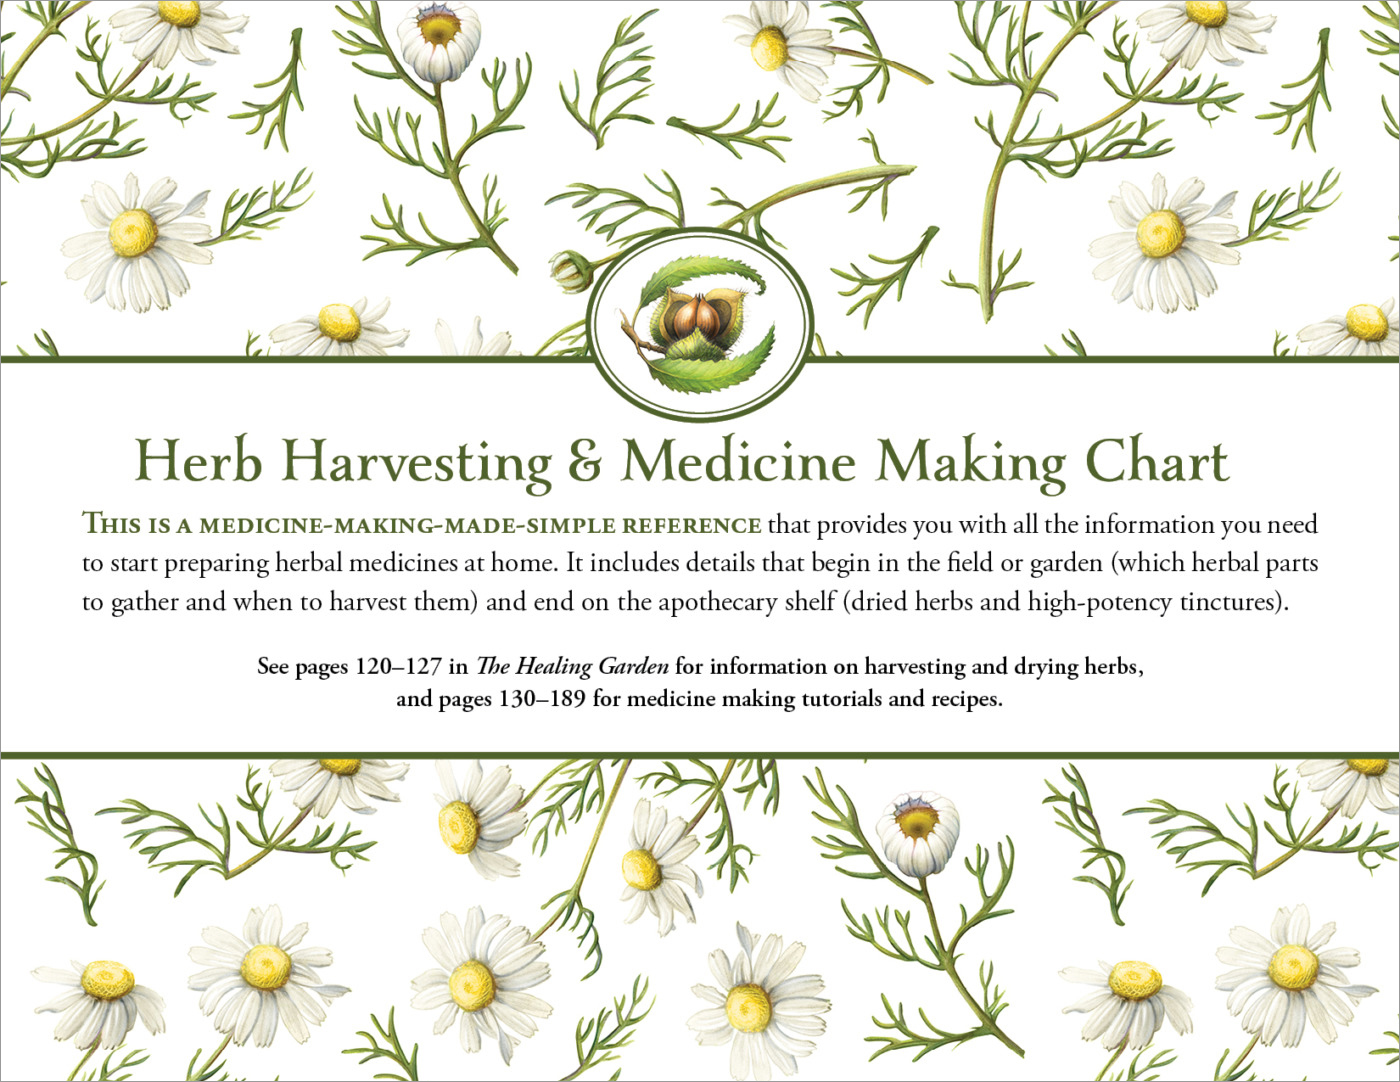 Herb Harvesting & Medicine Making Chart by Juliet Blankespoor.